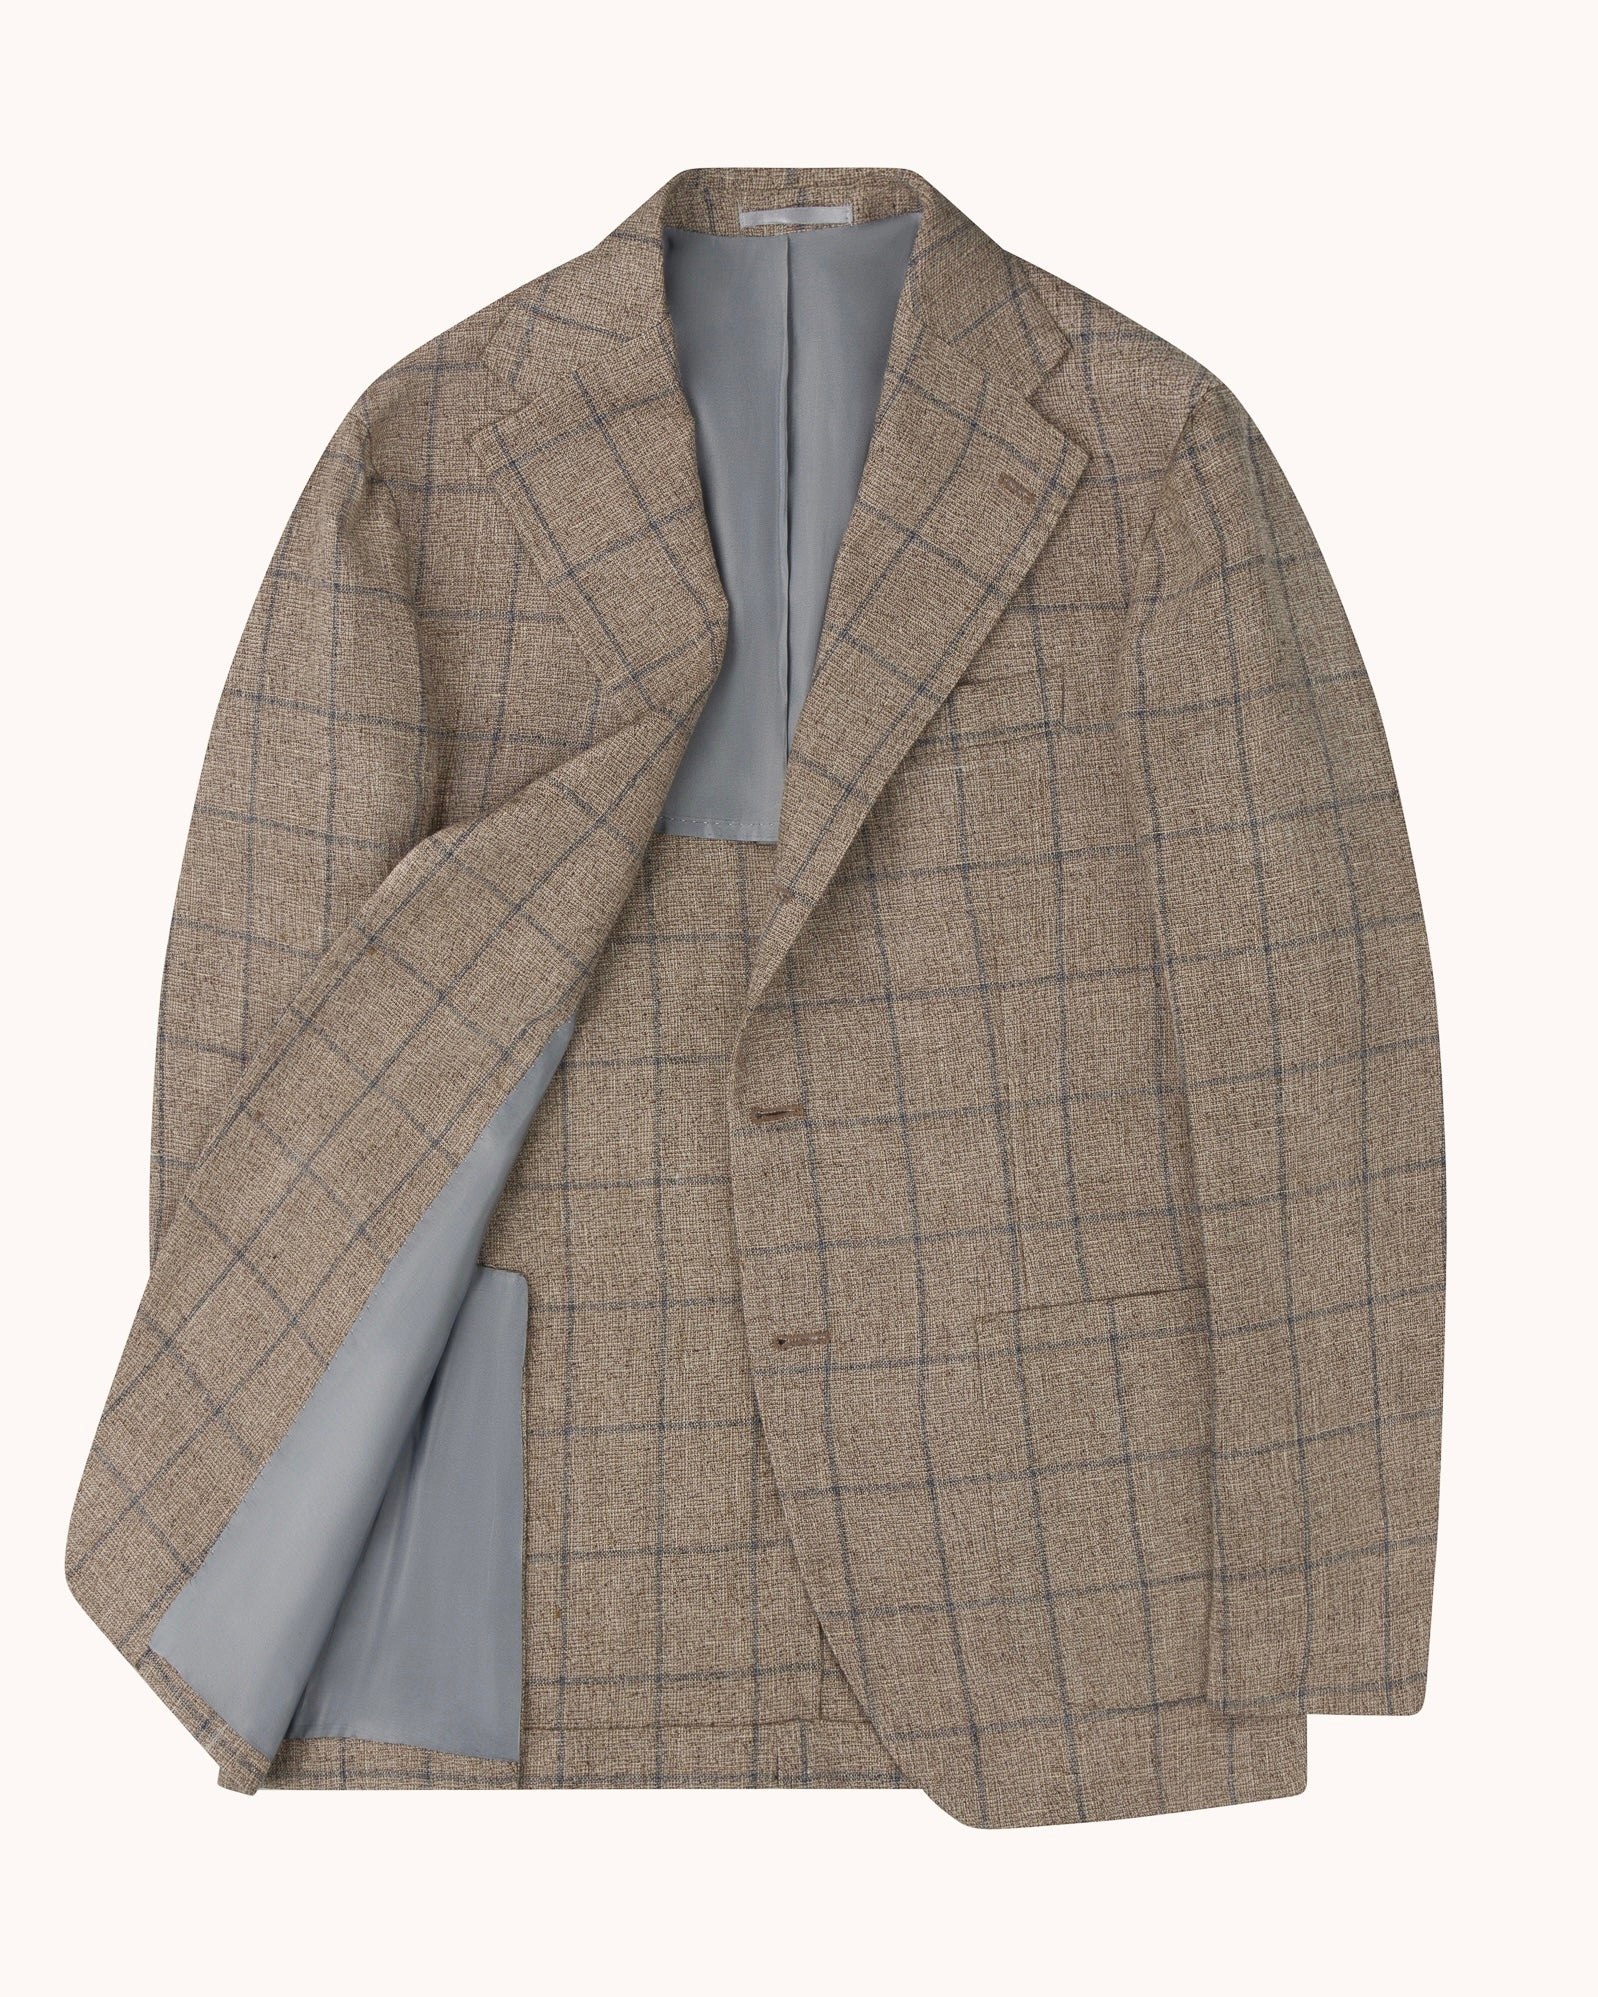 Sport Jacket - Beige Navy Check Wool Linen